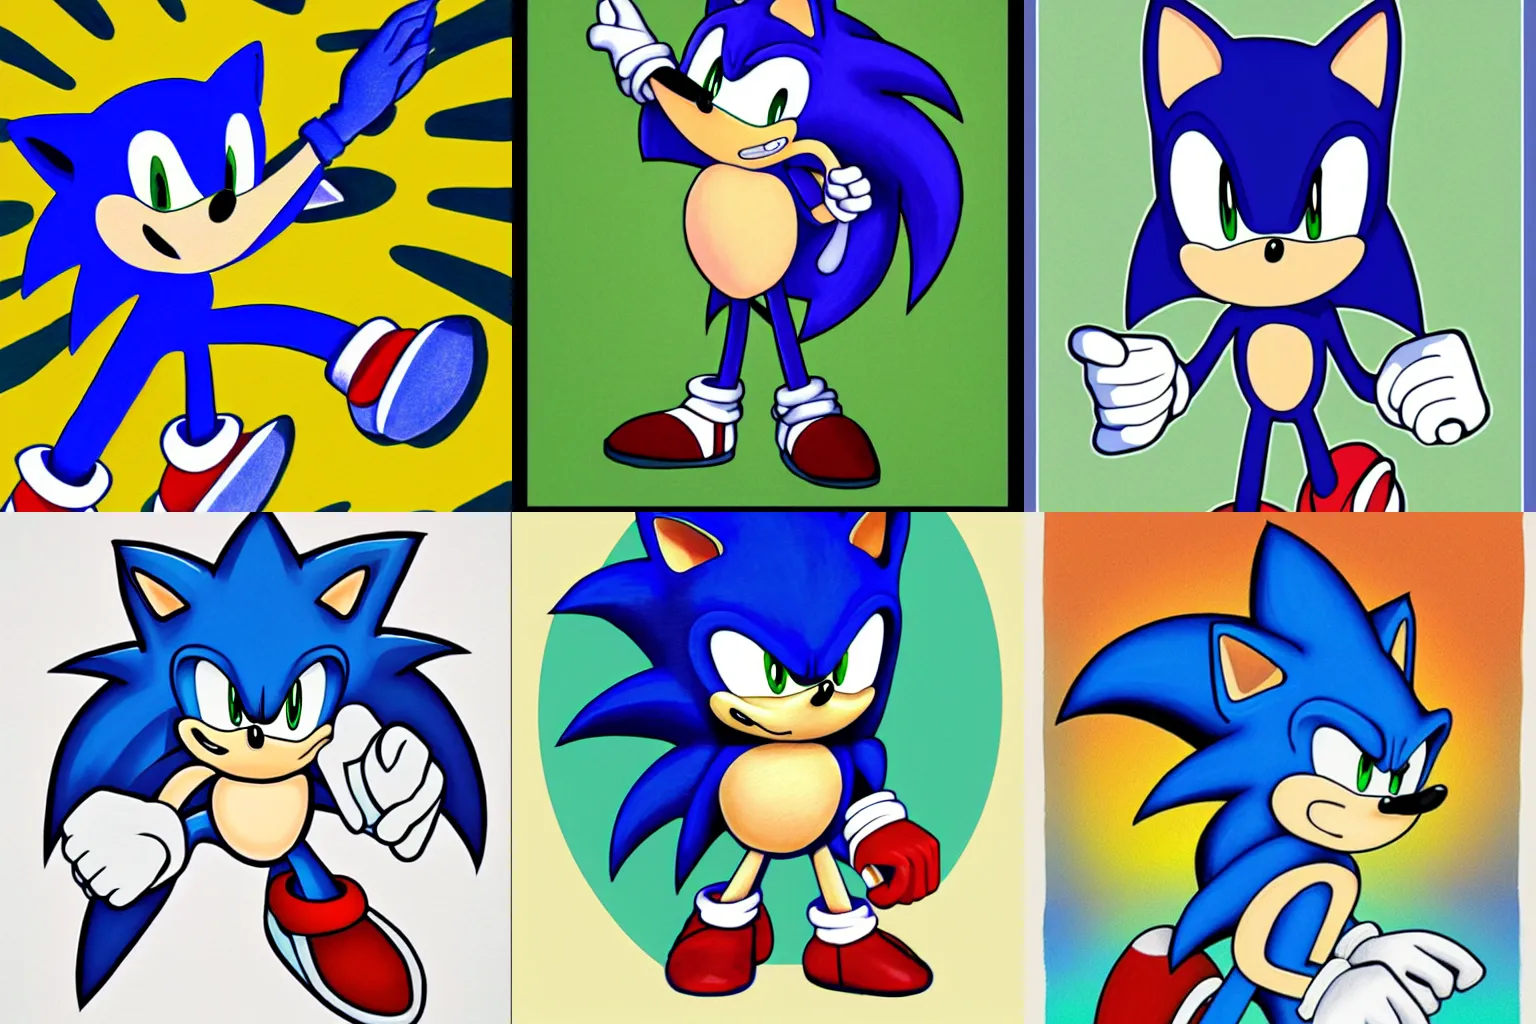 Composição em PIXEL ART do personagem Sonic the Hedgehog.Pixel Art  composition of Sonic the Hedgehog character in his super form.